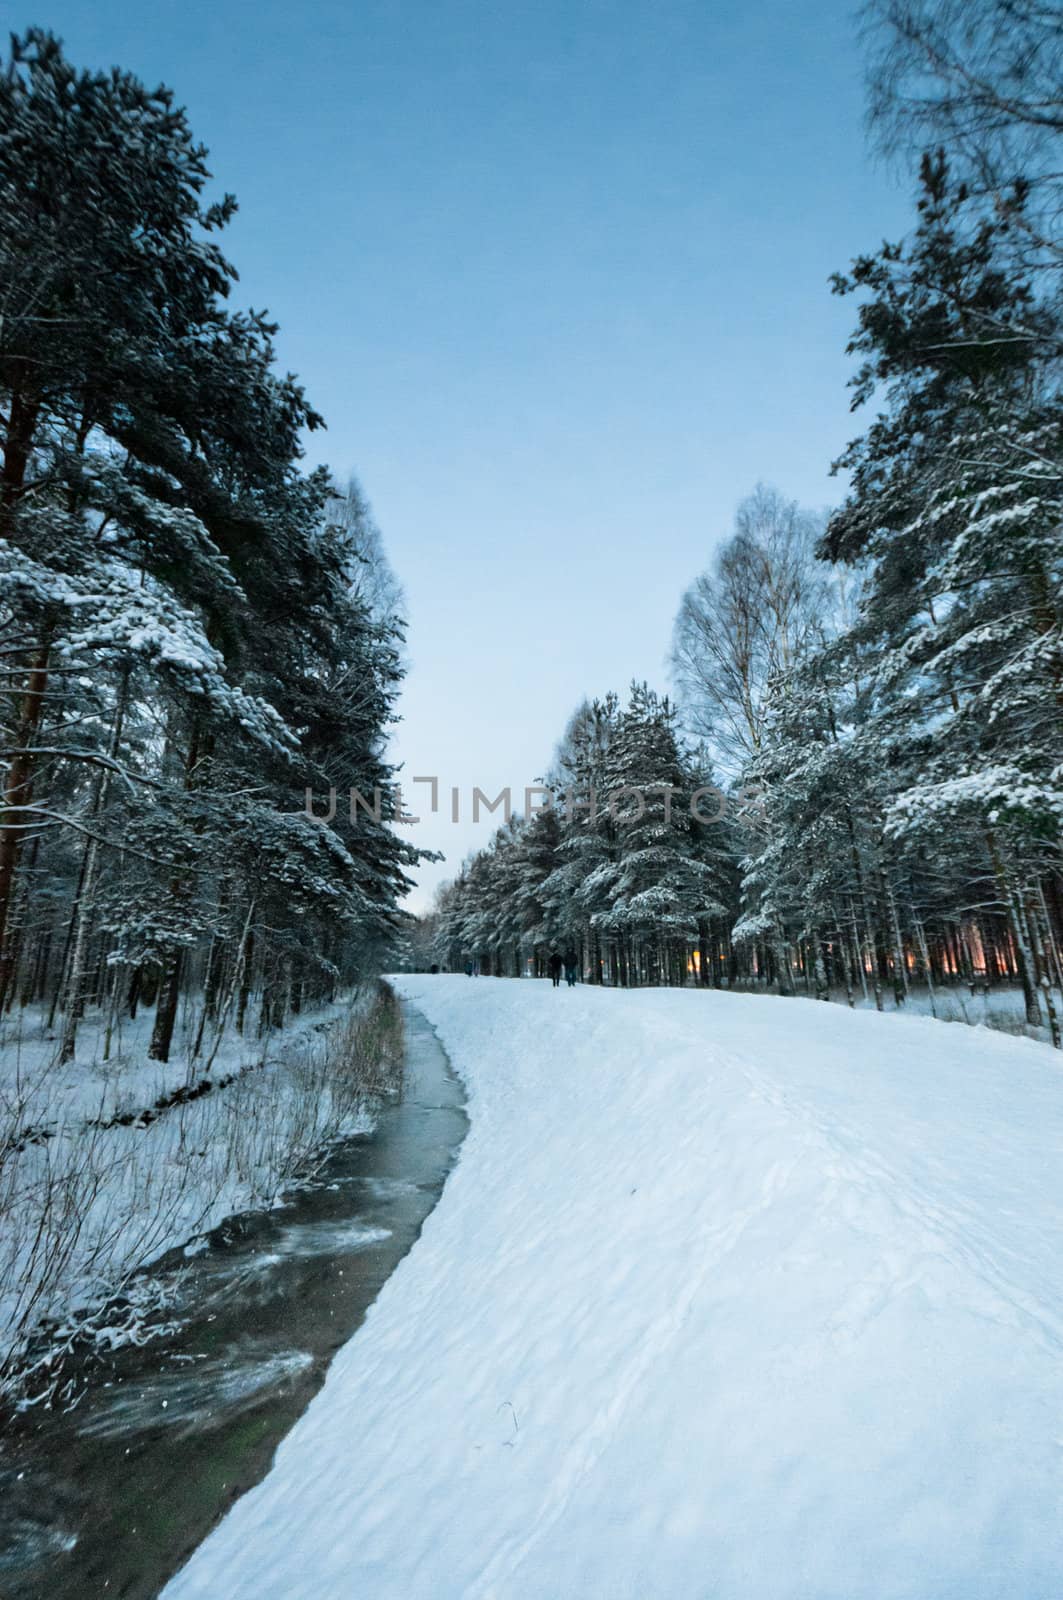 Creek in snowy wood by dmitryelagin